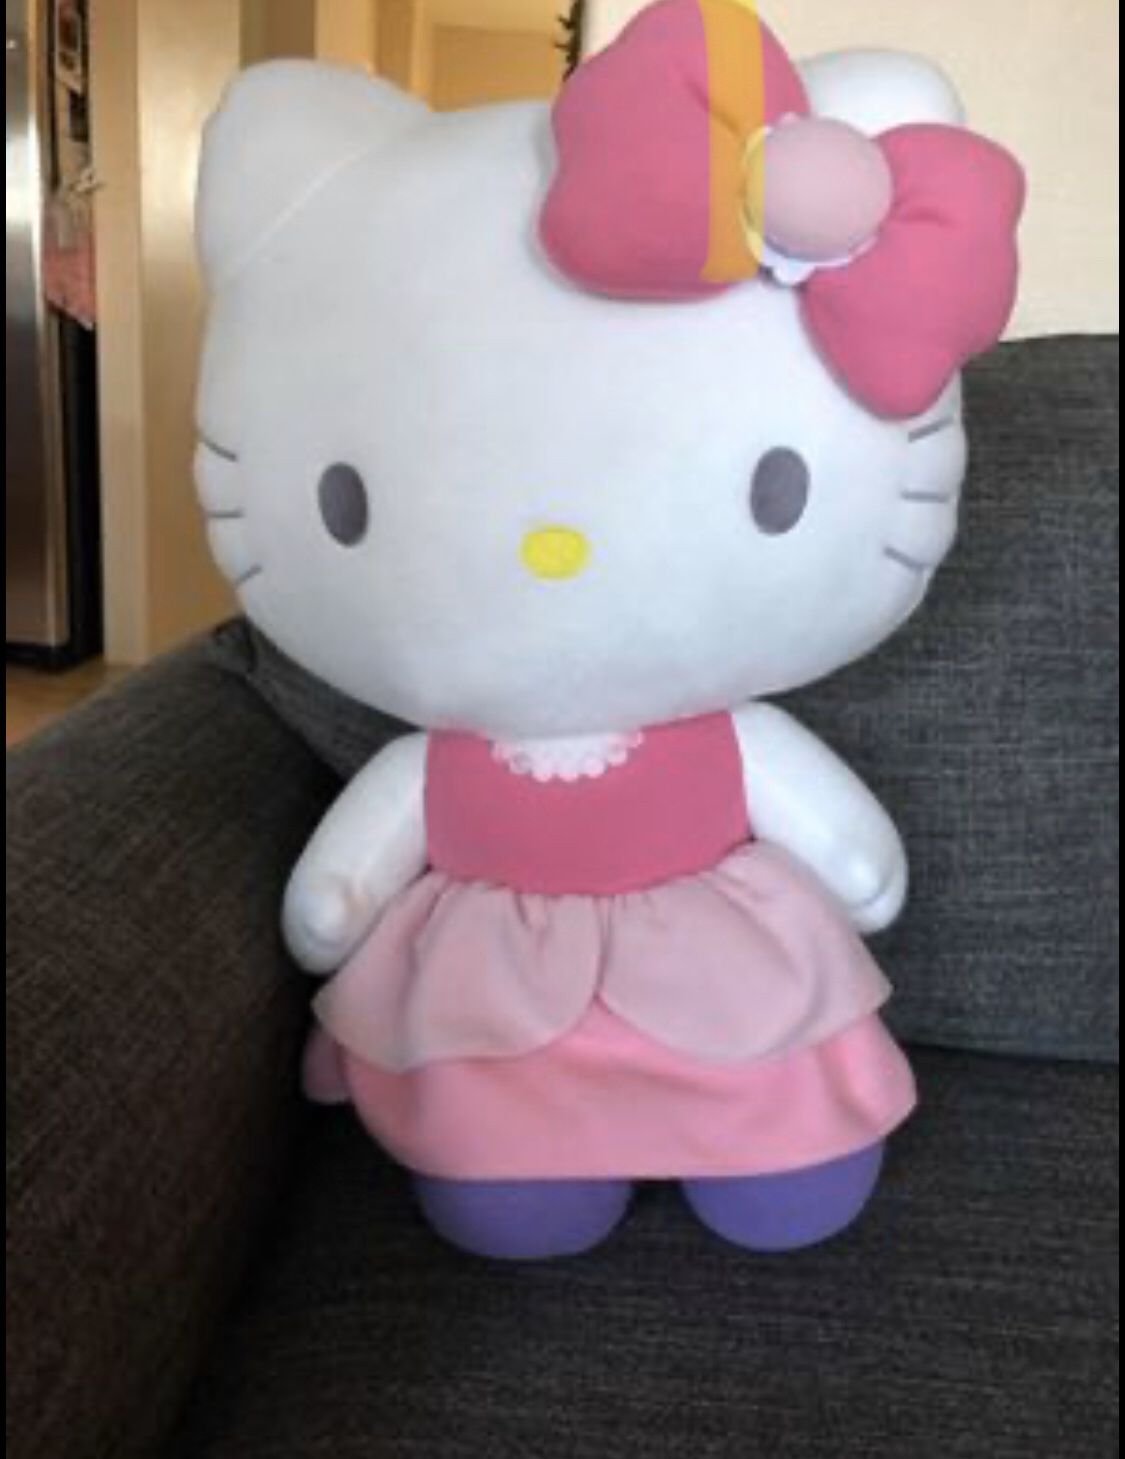 BNWT Large Huggable Hello Kitty